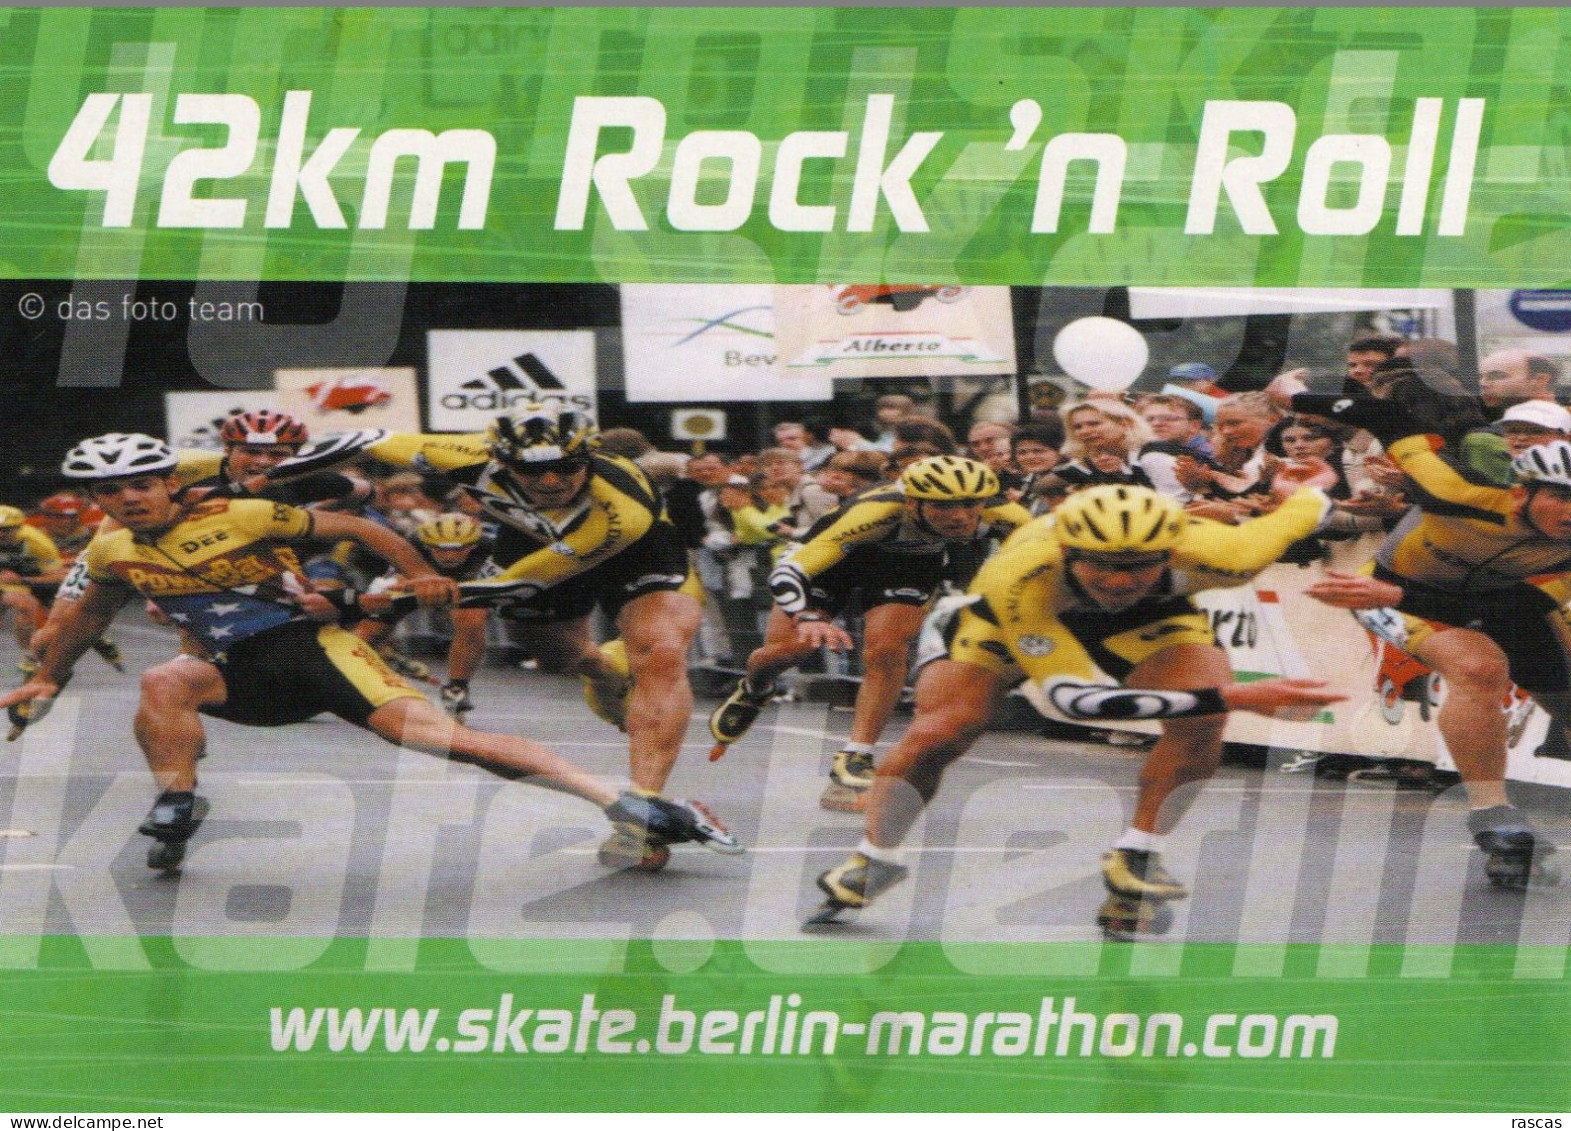 CLB - CPM - ROLLER - SKATE BERLIN MARATHON - 42 KM ROCK 'N ROLL - Atletismo